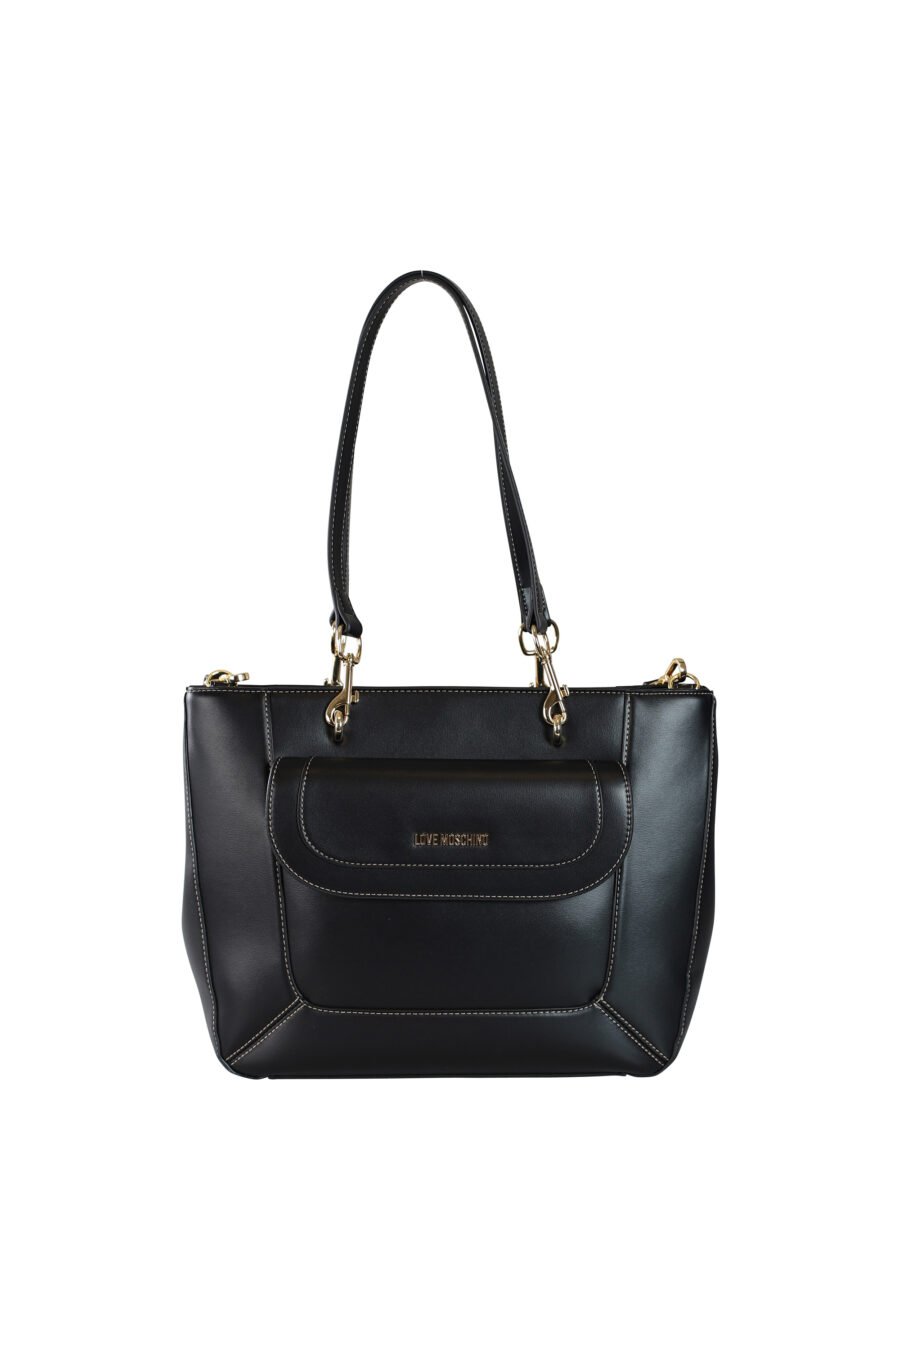 Black shopper bag with front pocket and mini logo - 8059965779126